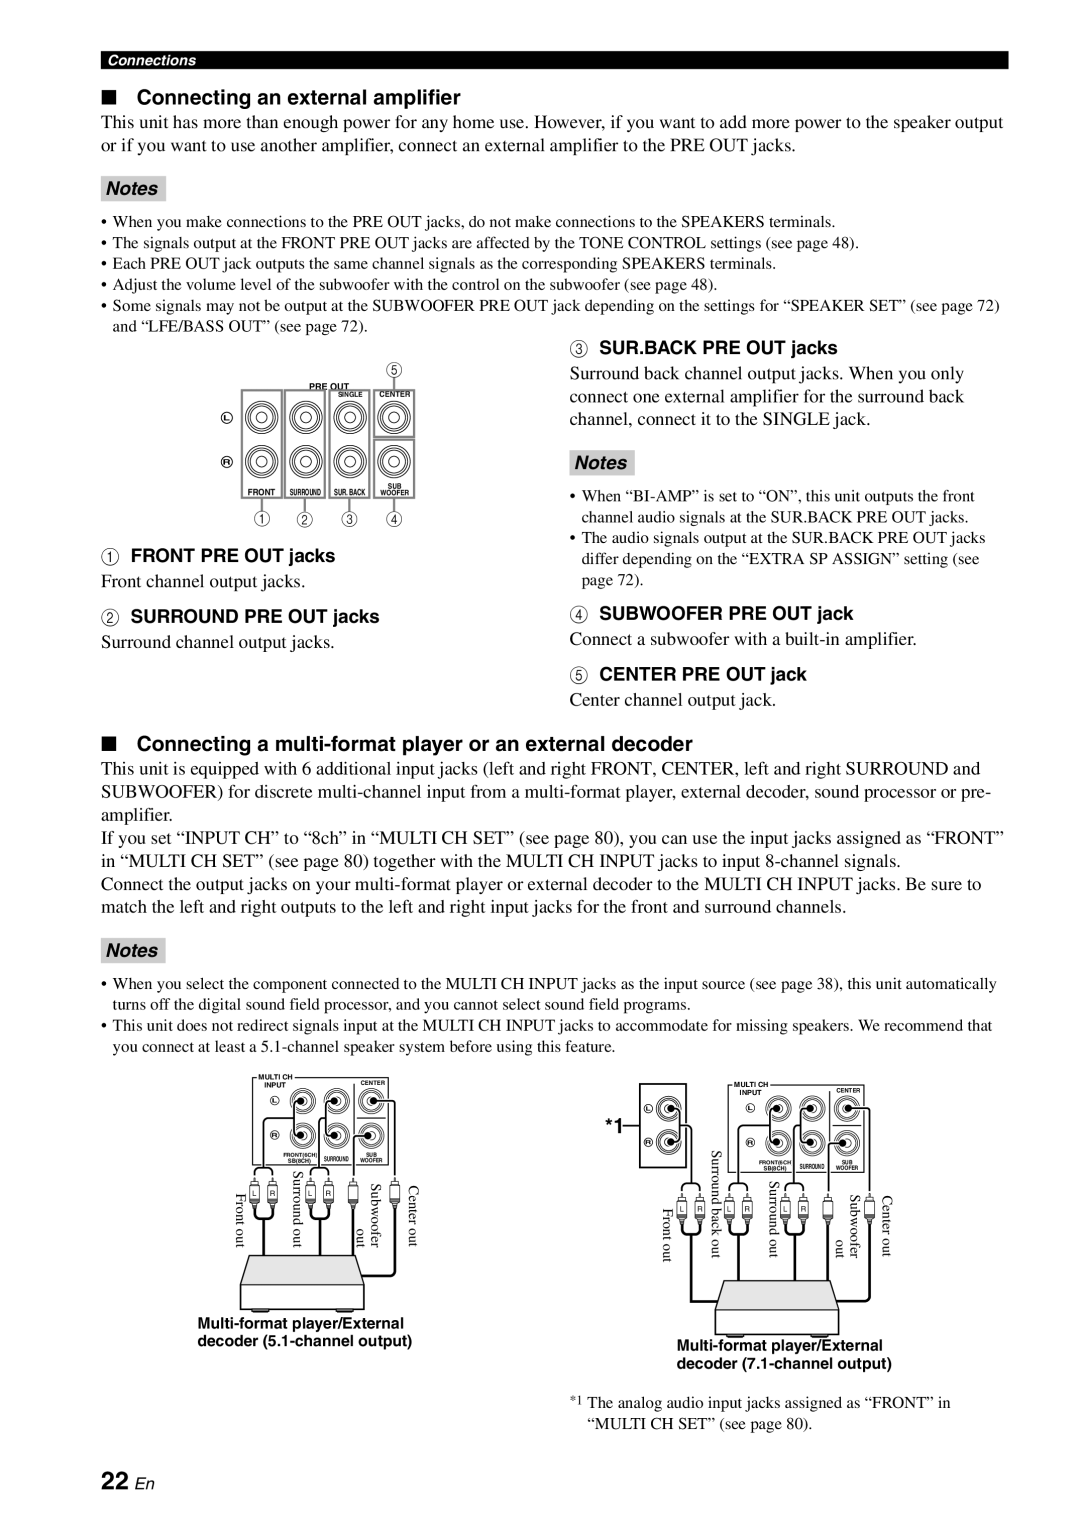 Yamaha HTR-6060 owner manual 22 En, Connecting an external amplifier, 1FRONT PRE OUT jacks, 2SURROUND PRE OUT jacks, Notes 